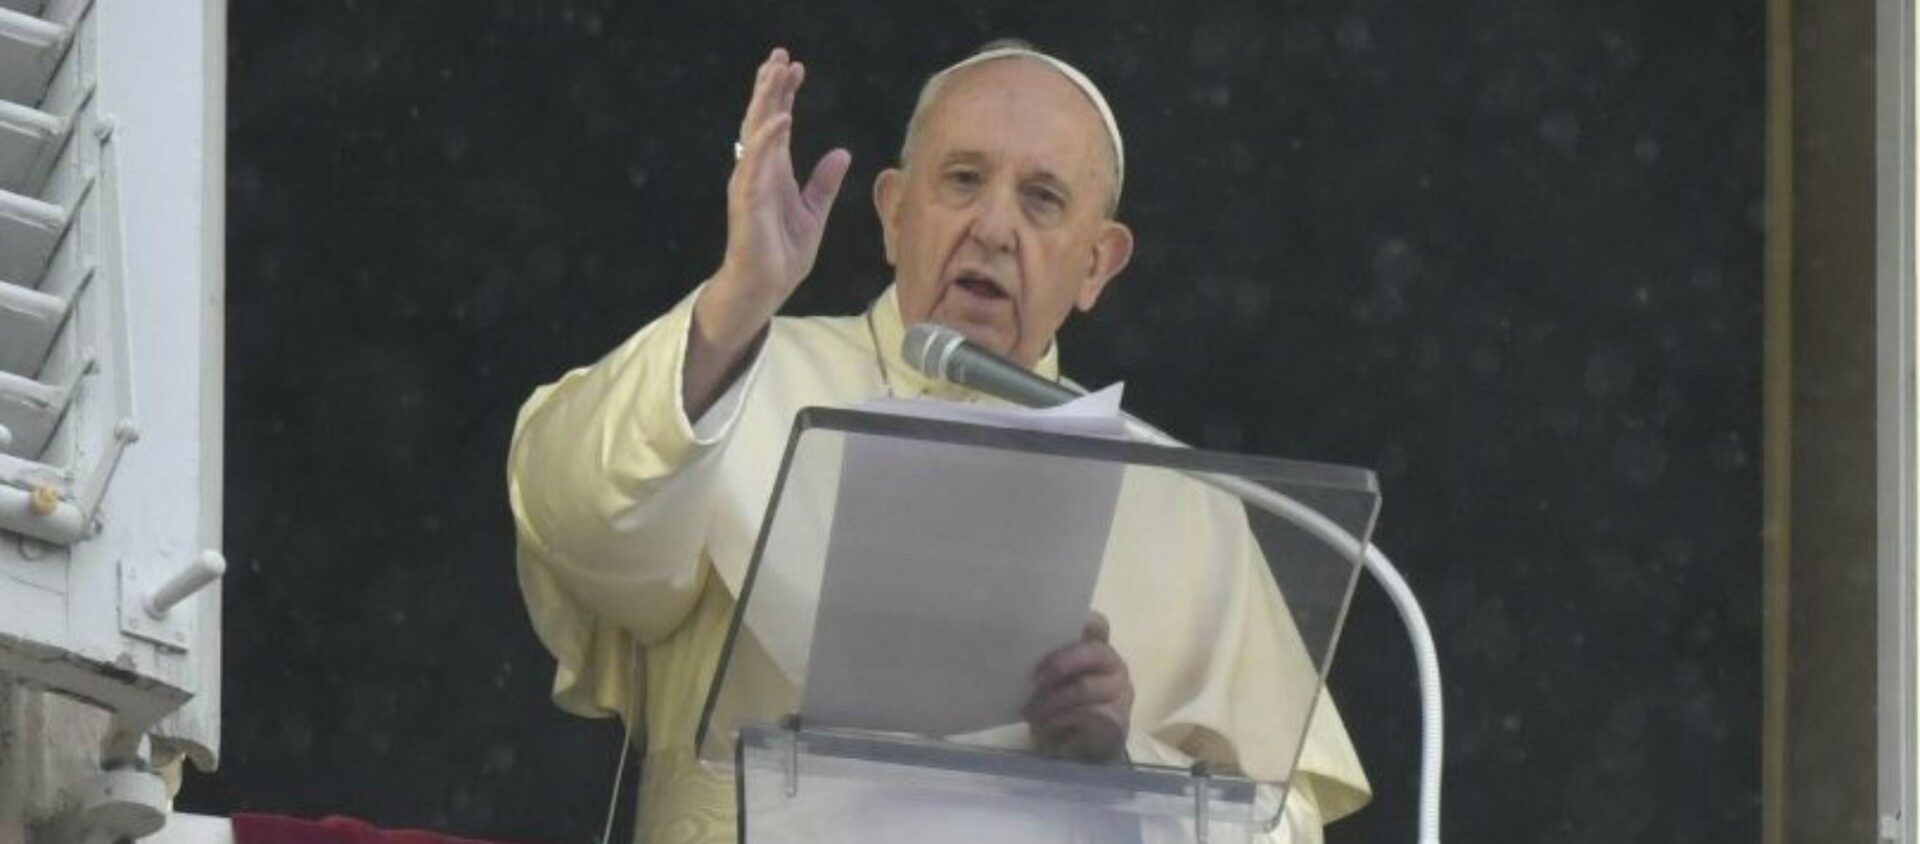 Le pape François demande de respecter les règles anti-Covid-19 | © Vatican Media